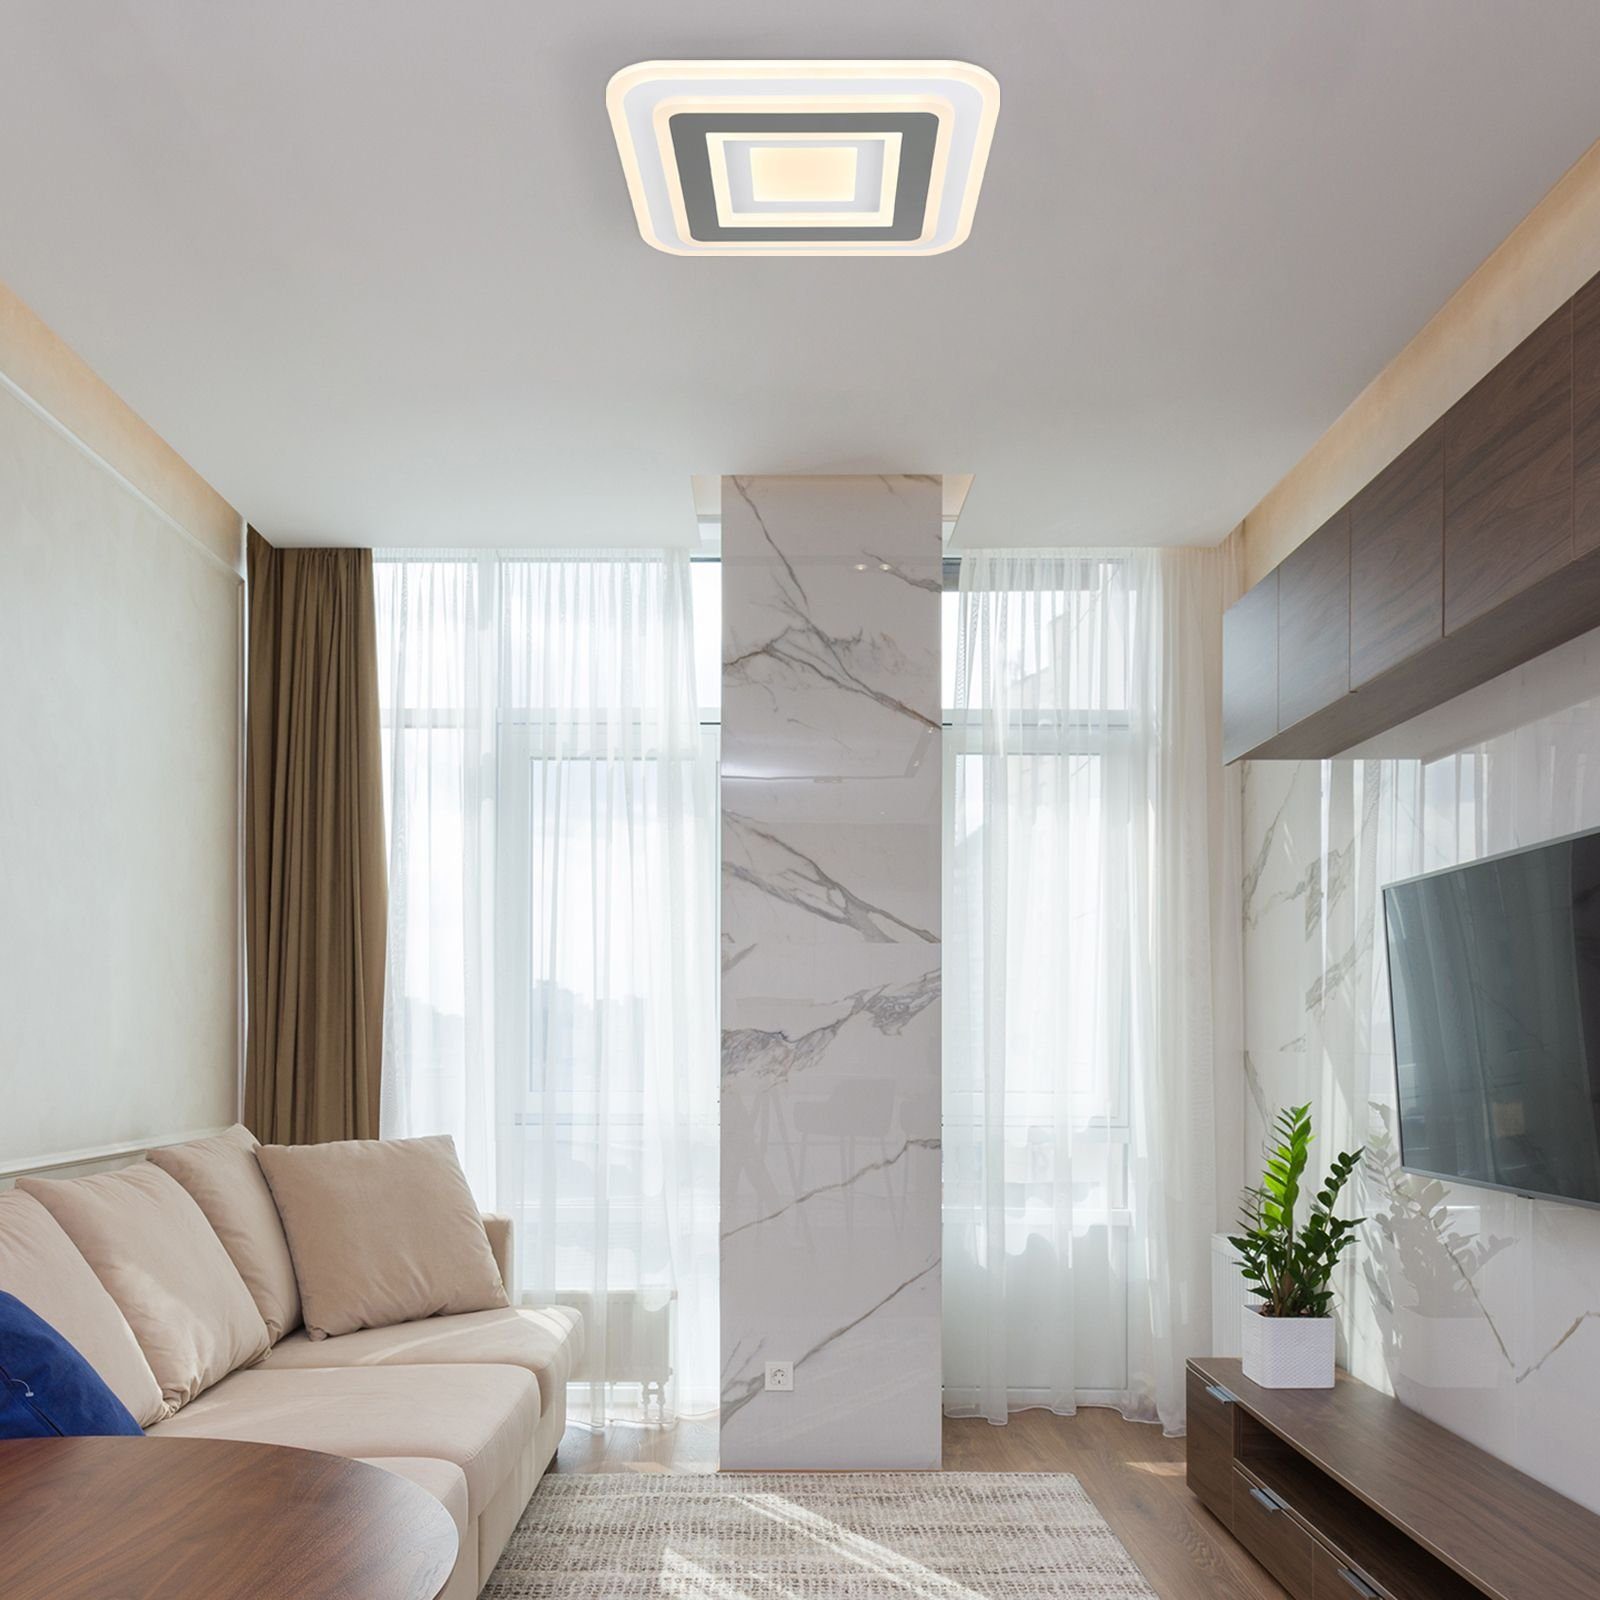 Globo Deckenleuchte GLOBO Deckenleuchte Deckenlampe Fernbedienung LED Dimmbar Wohnzimmer